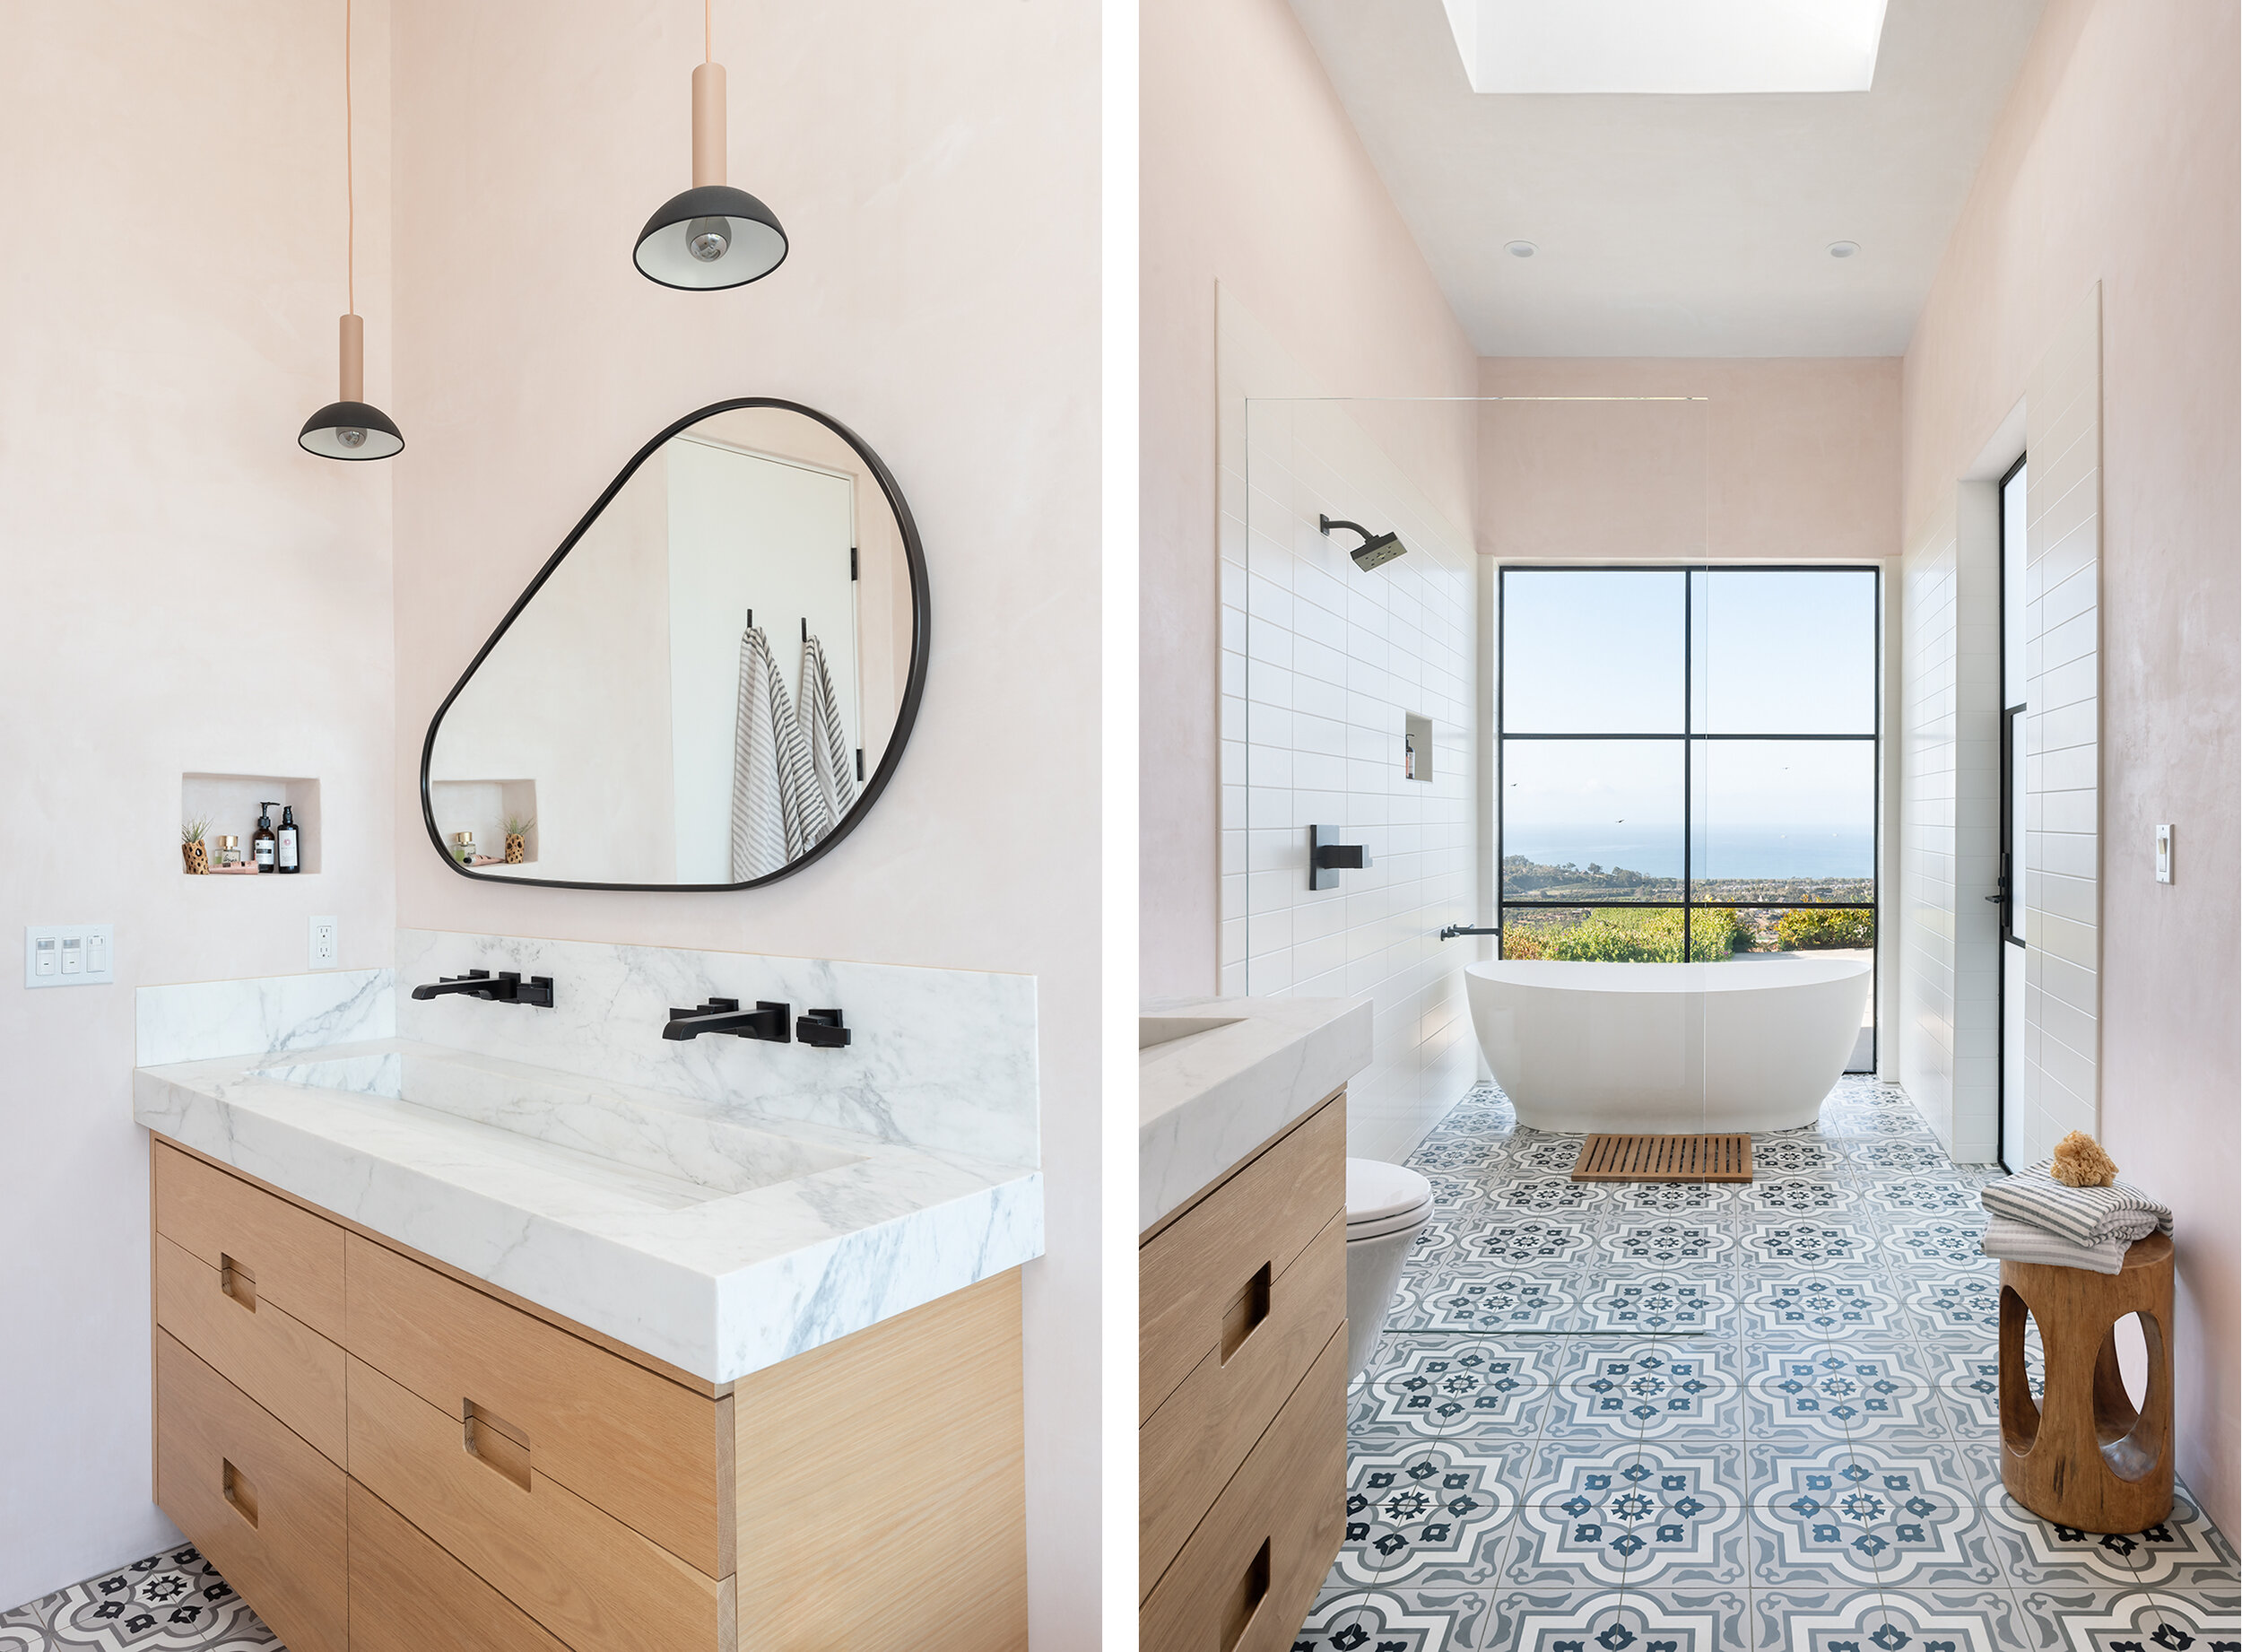  Carpinteria, California modern bathroom. Interior design by Mint Home Decor. Photography by Crystal Waye Photo Design. 